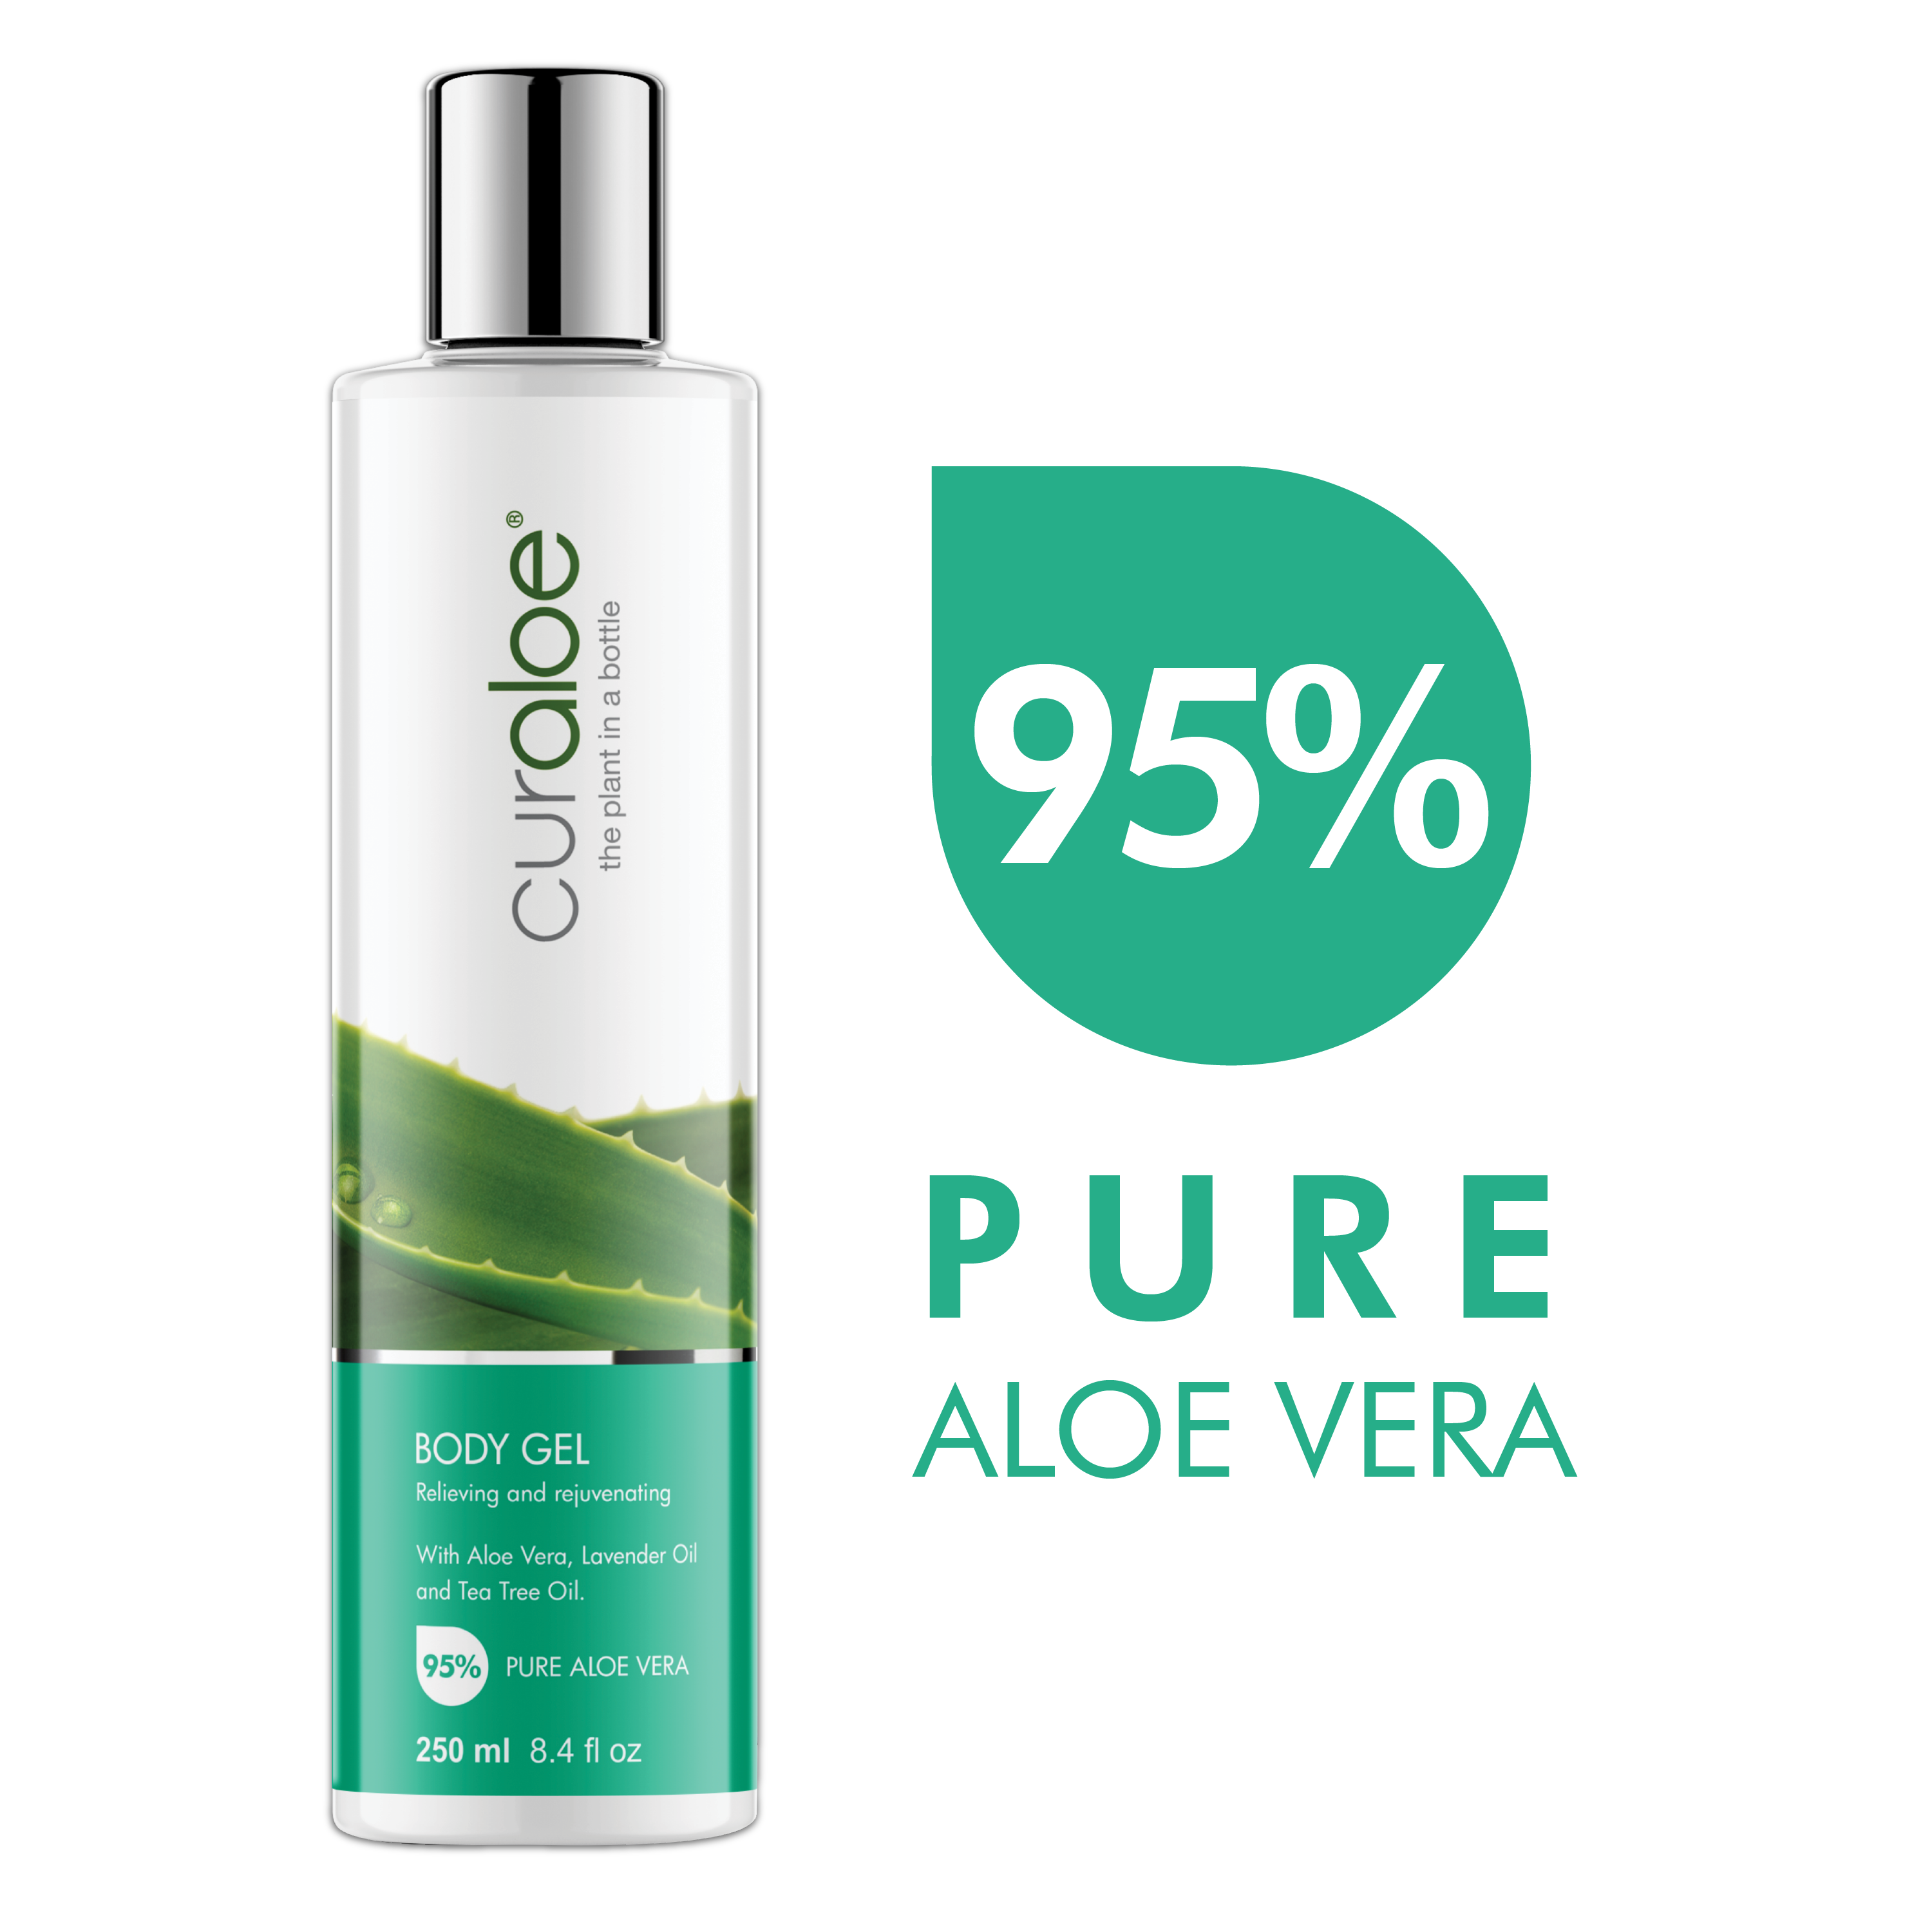 Aanpassen Beer Oprichter Curaloe Body Gel 95% Aloe Vera skin repair Gel - Curaloe USA